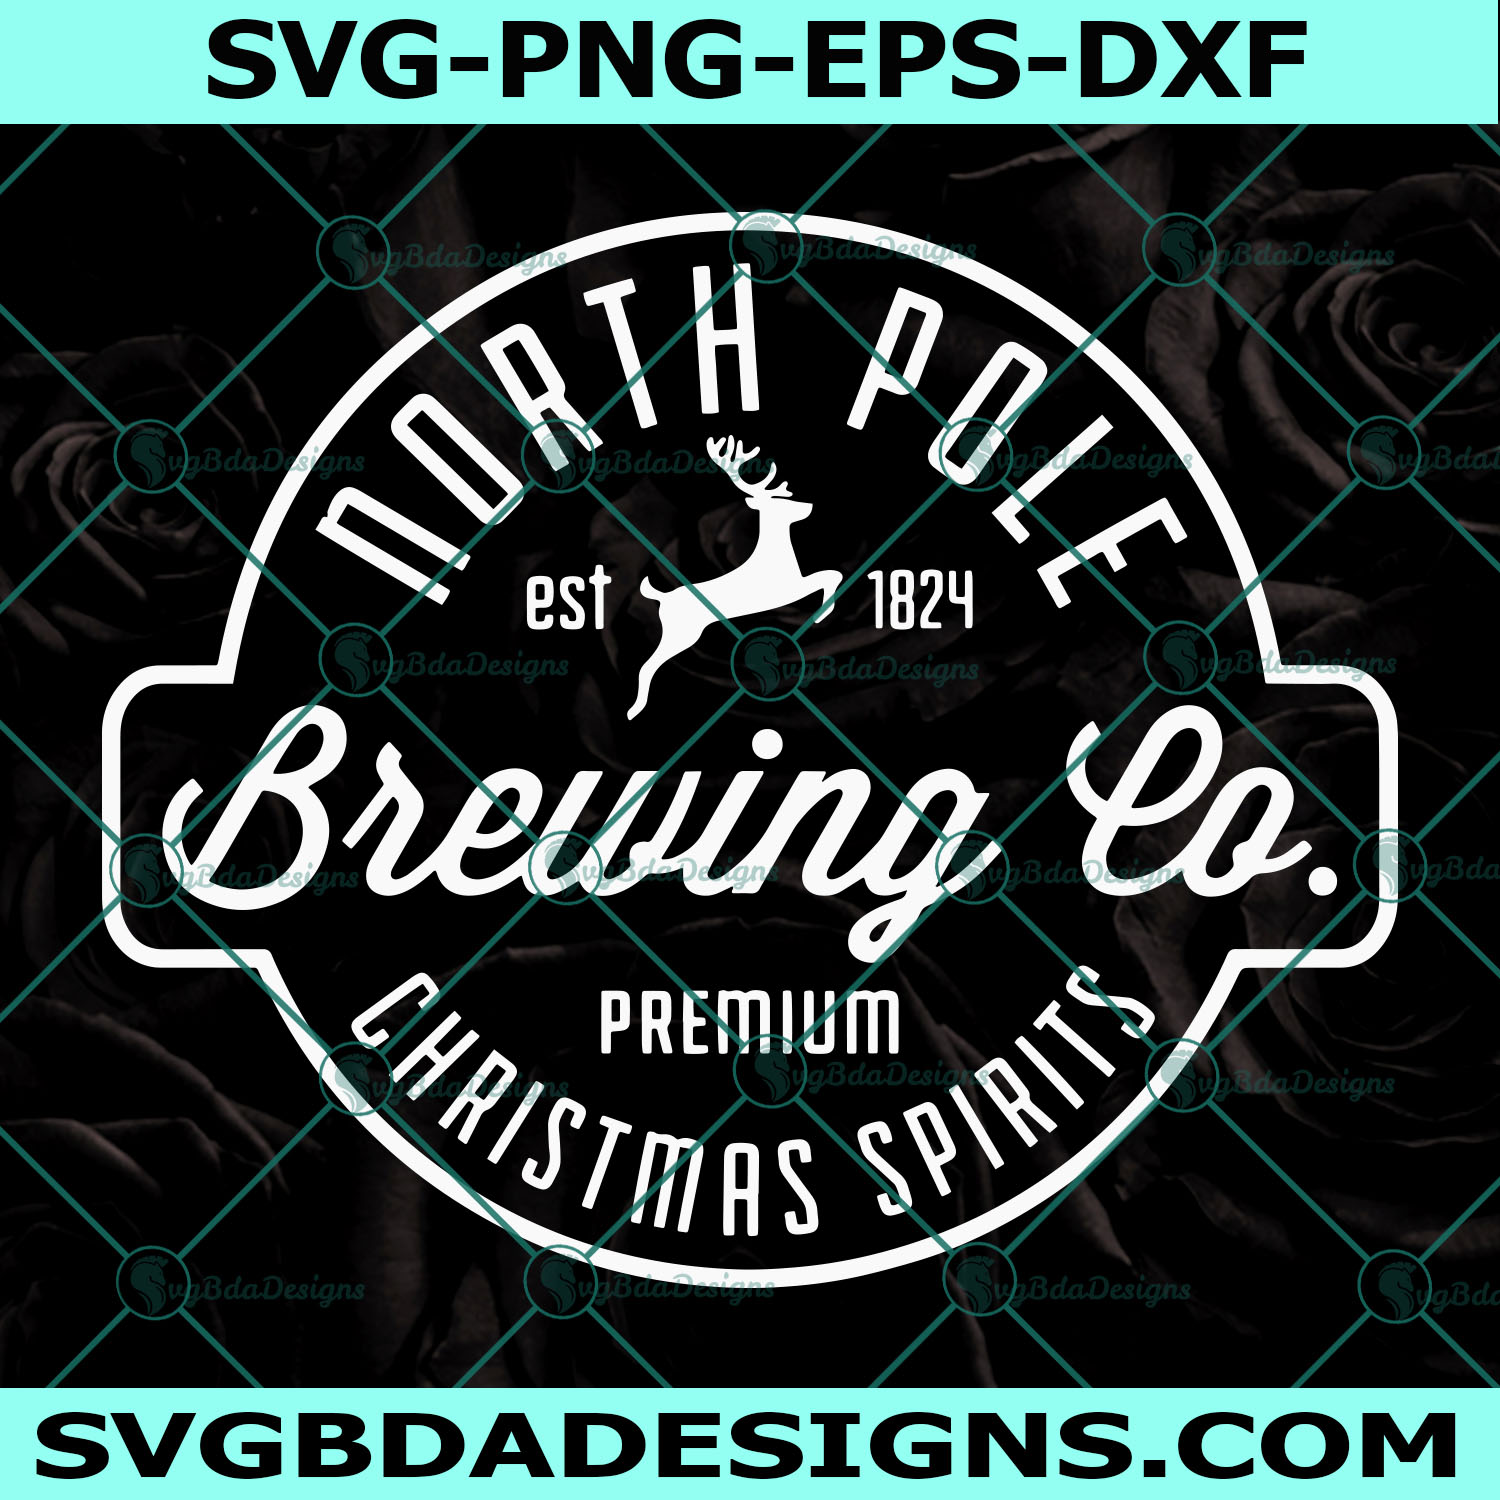 North Pole Brewing Co Svg, Premium Christmas Spirits Svg,Christmas Reindeer Svg, Christmas Brewing Co Svg, Cricut, Digital Download